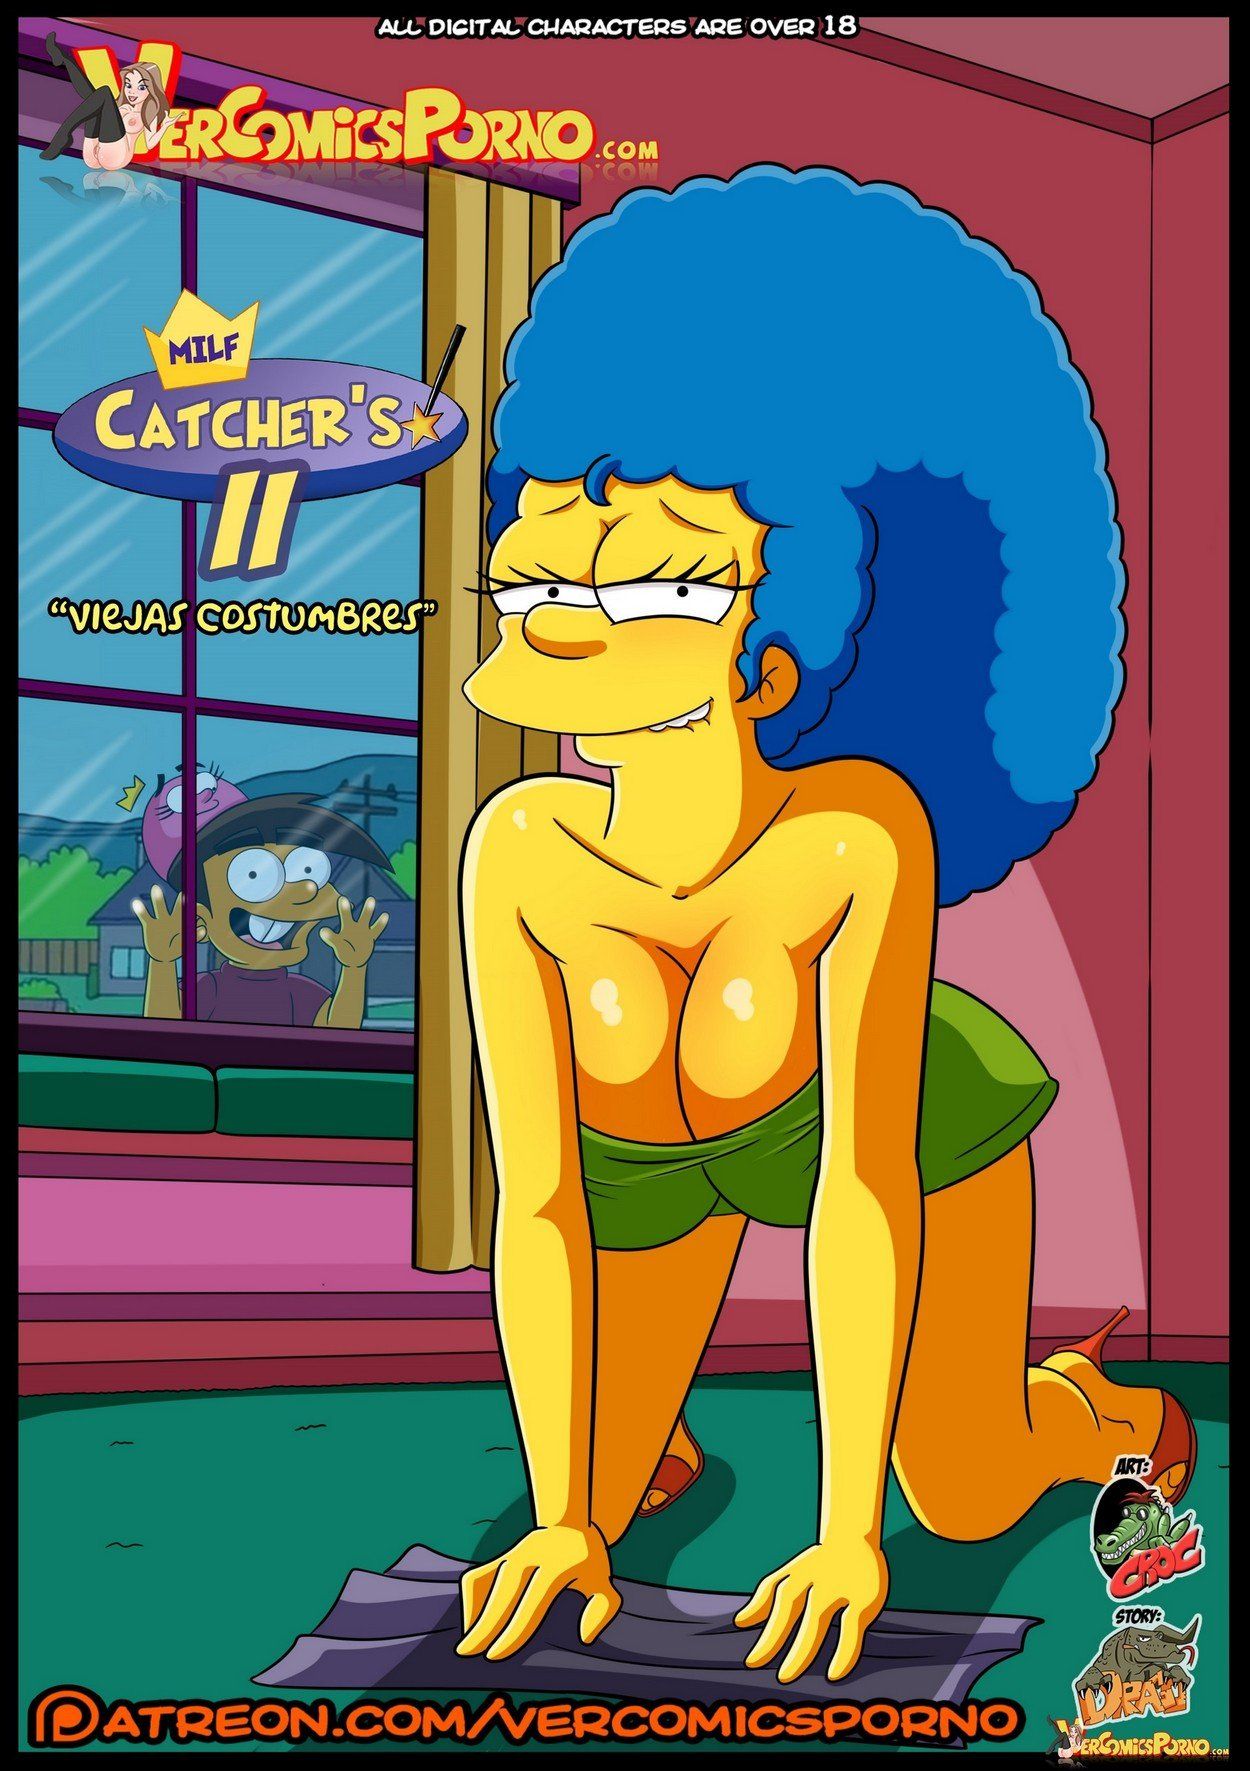 Simpsons porno video